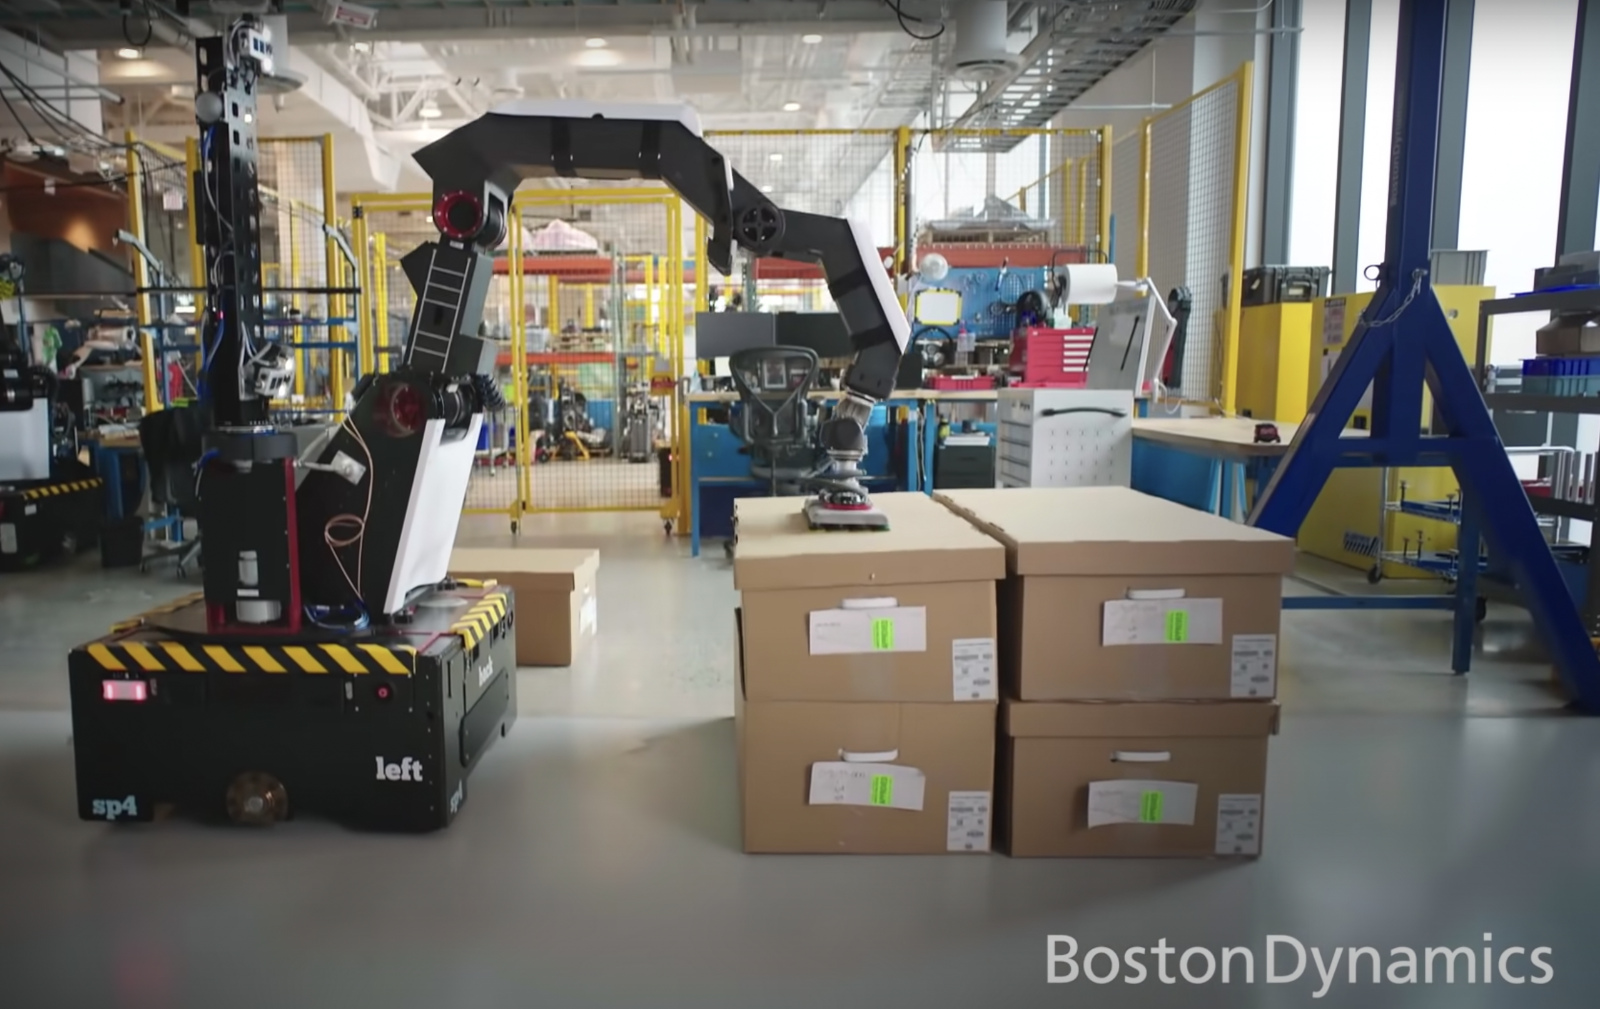 Boston Dynamics begins selling its Stretch warehouse robot